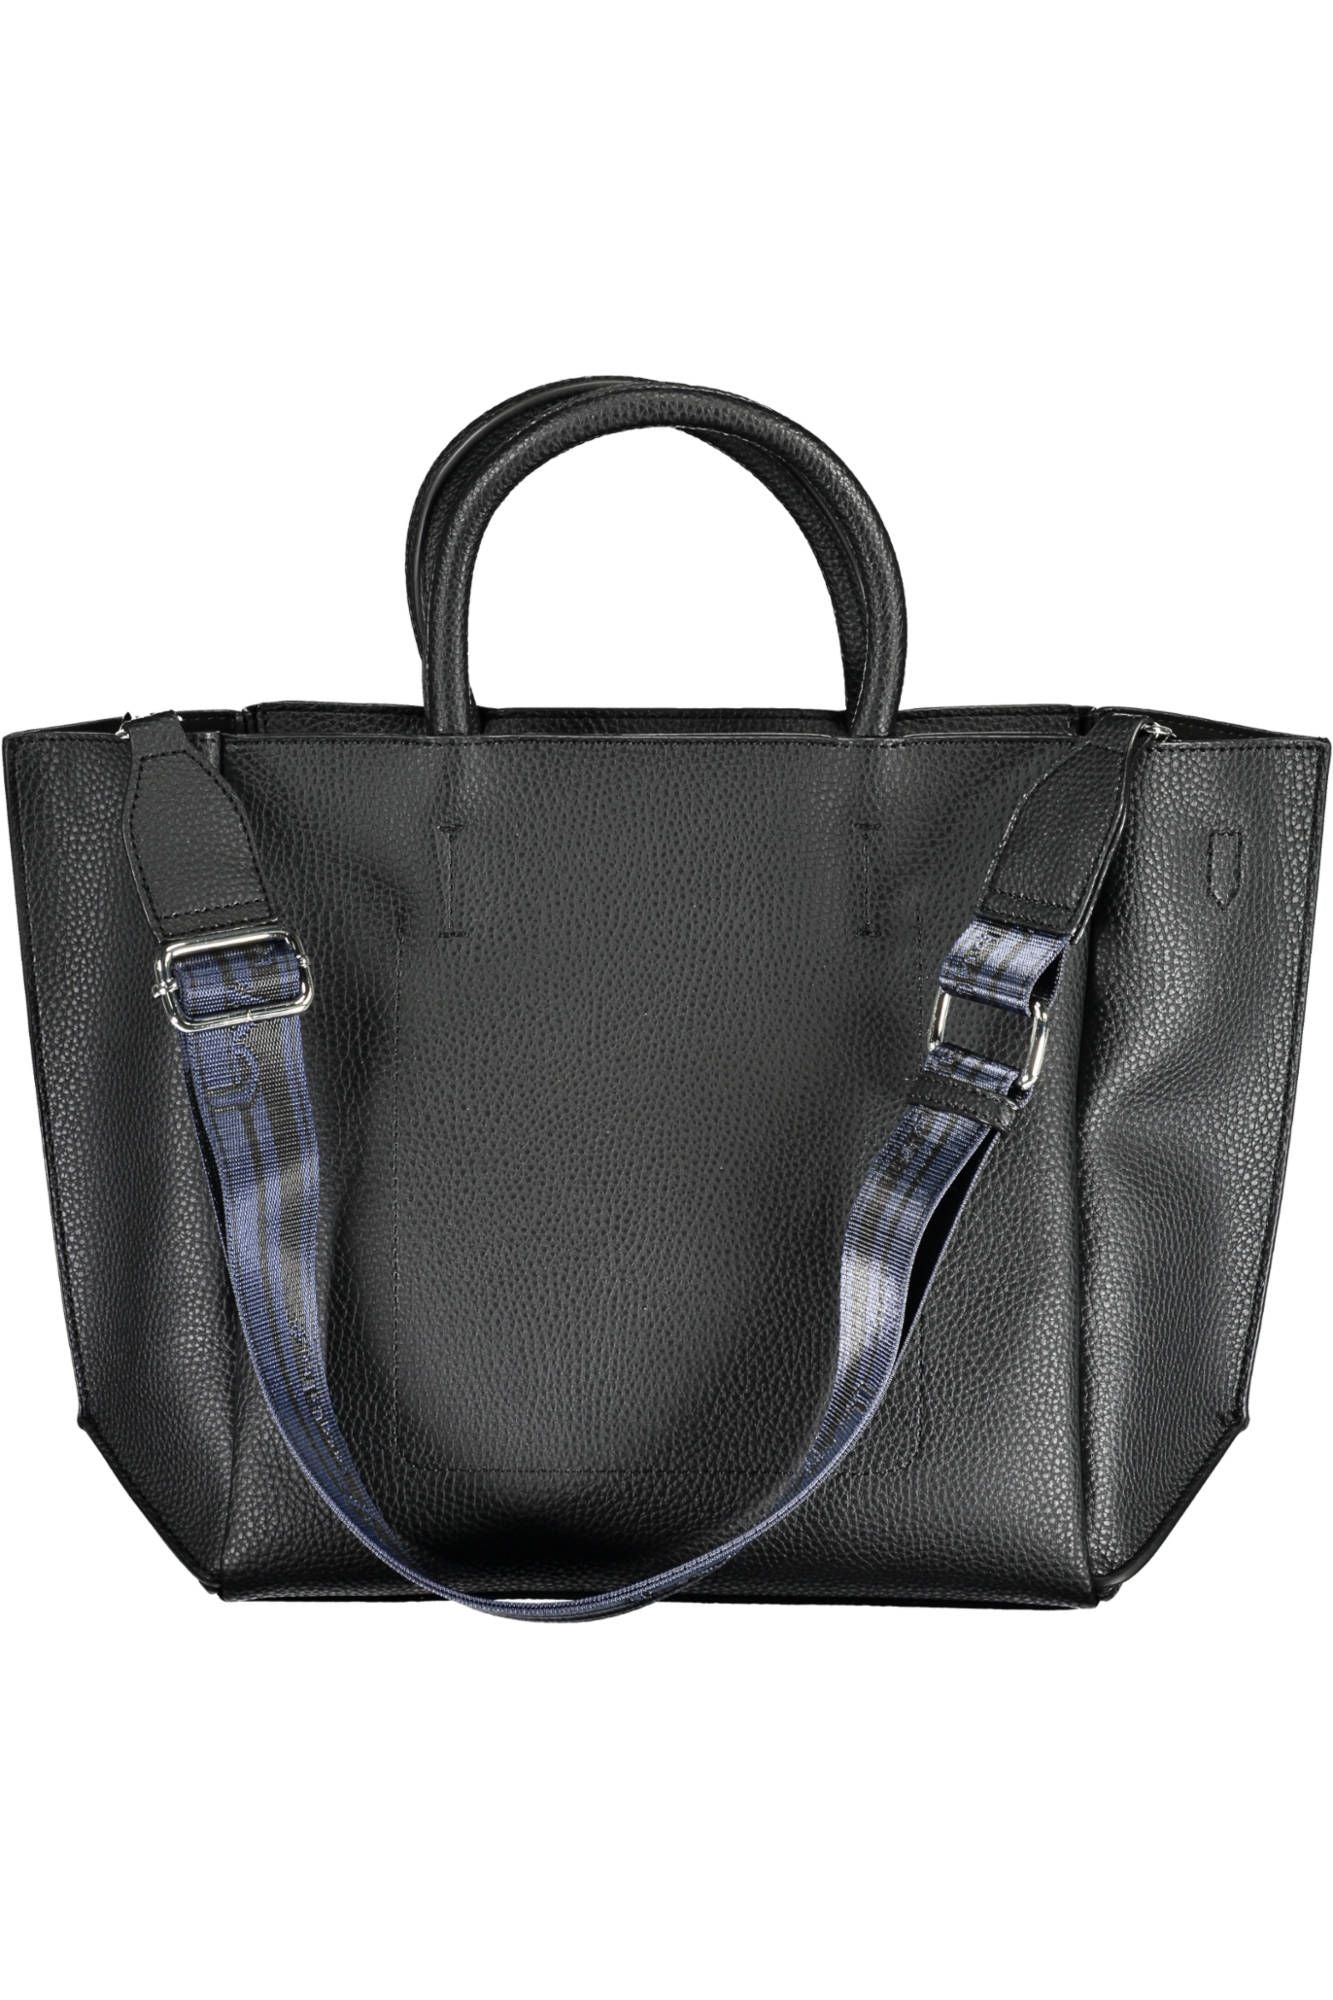 BYBLOS Elegant Black Handbag with Chic Print